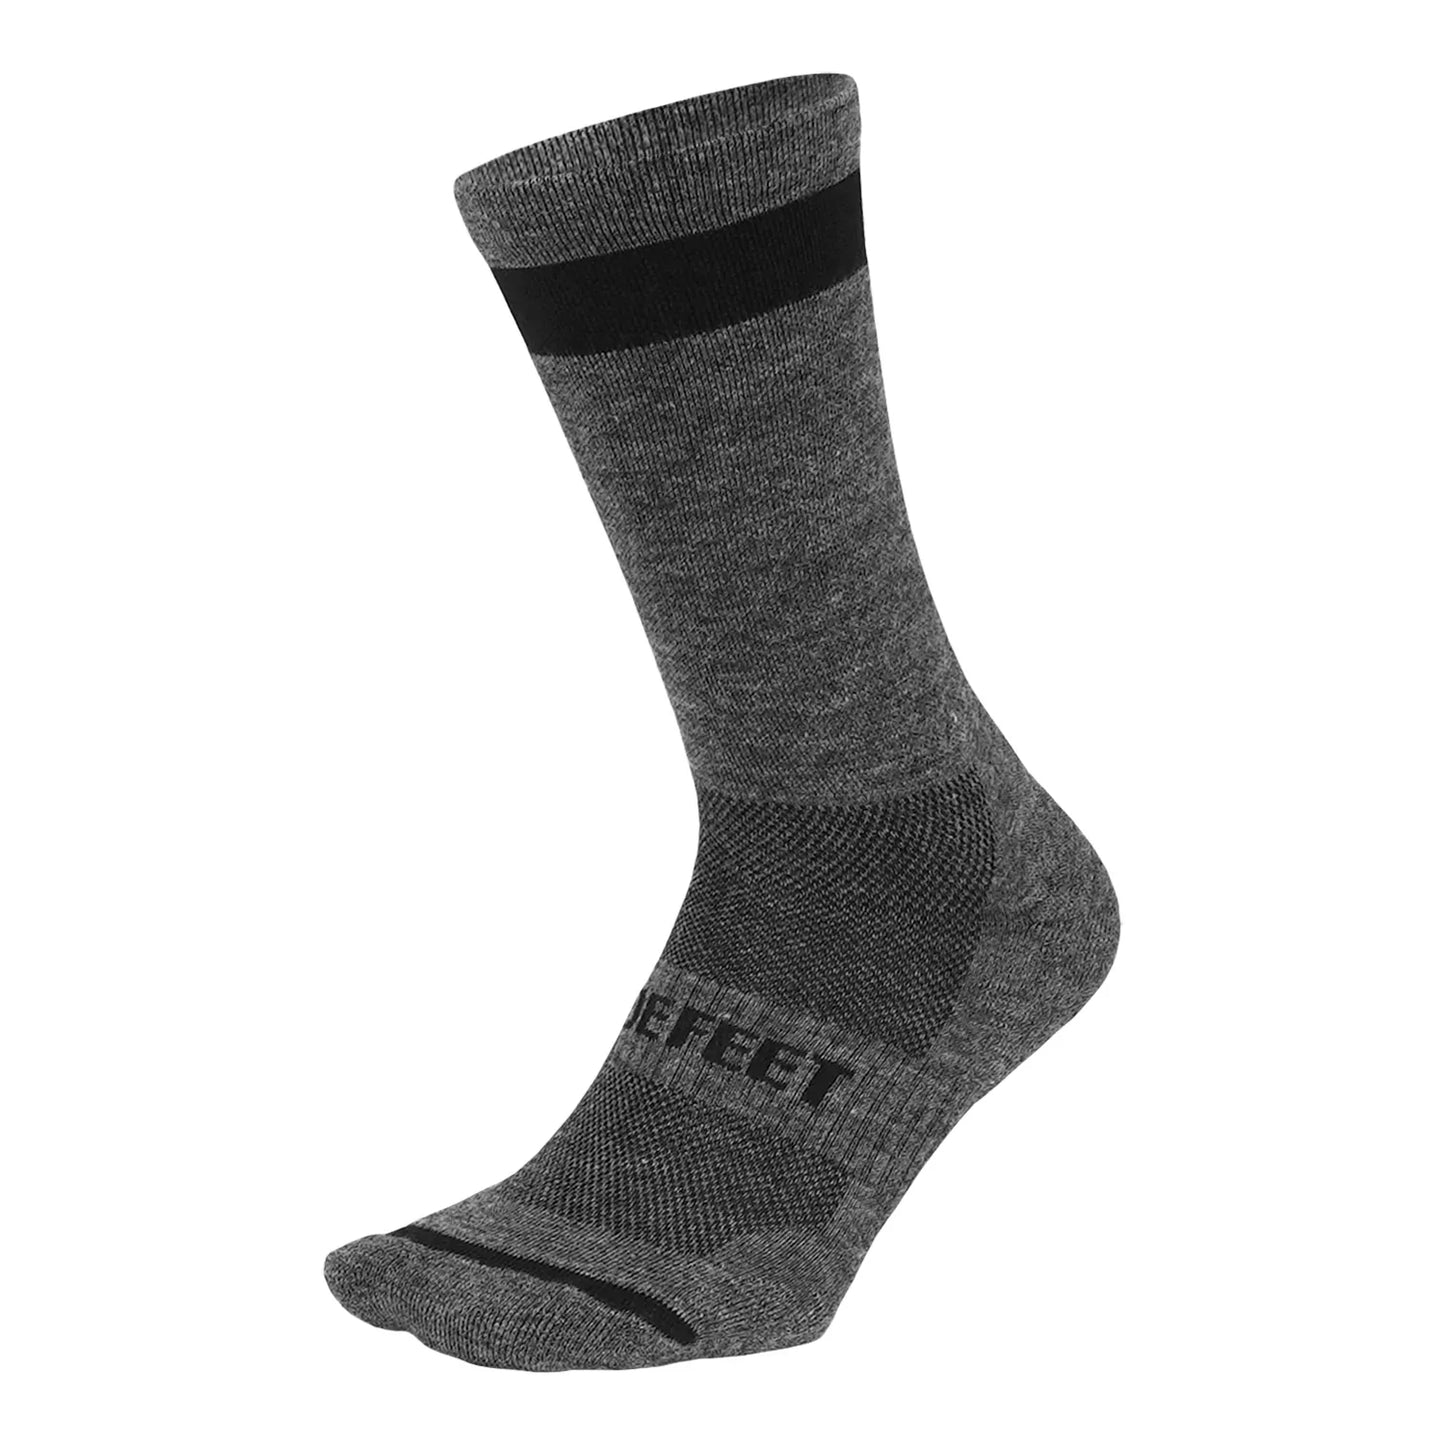 DeFeet Cush wool cycling sock in grey with a wide black cuff stripe